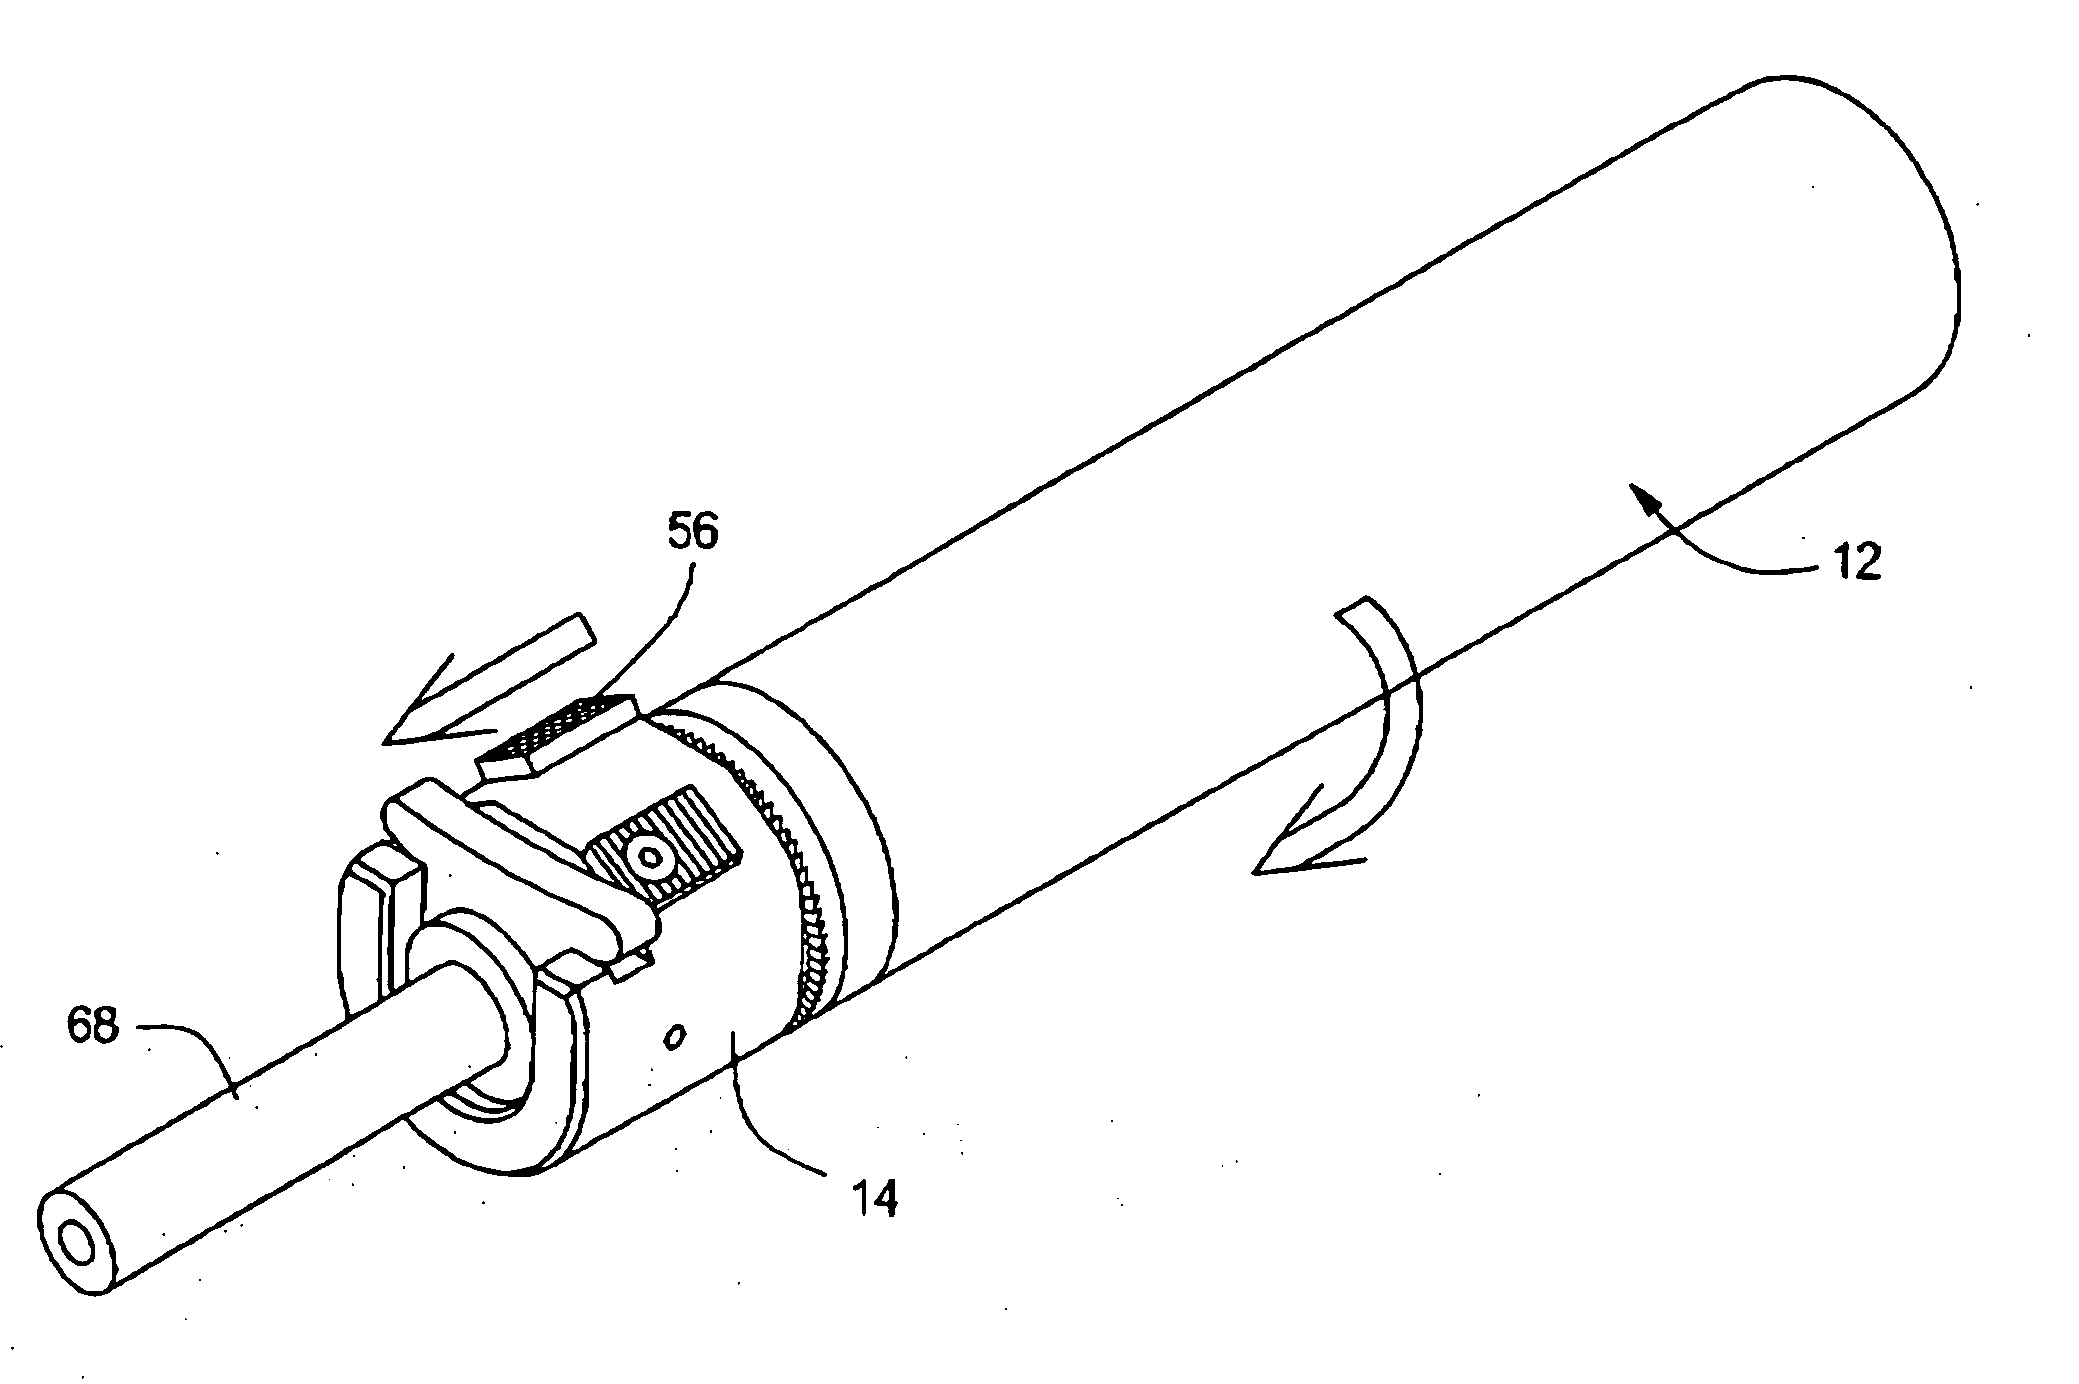 Lock/rotation mounted suppressor